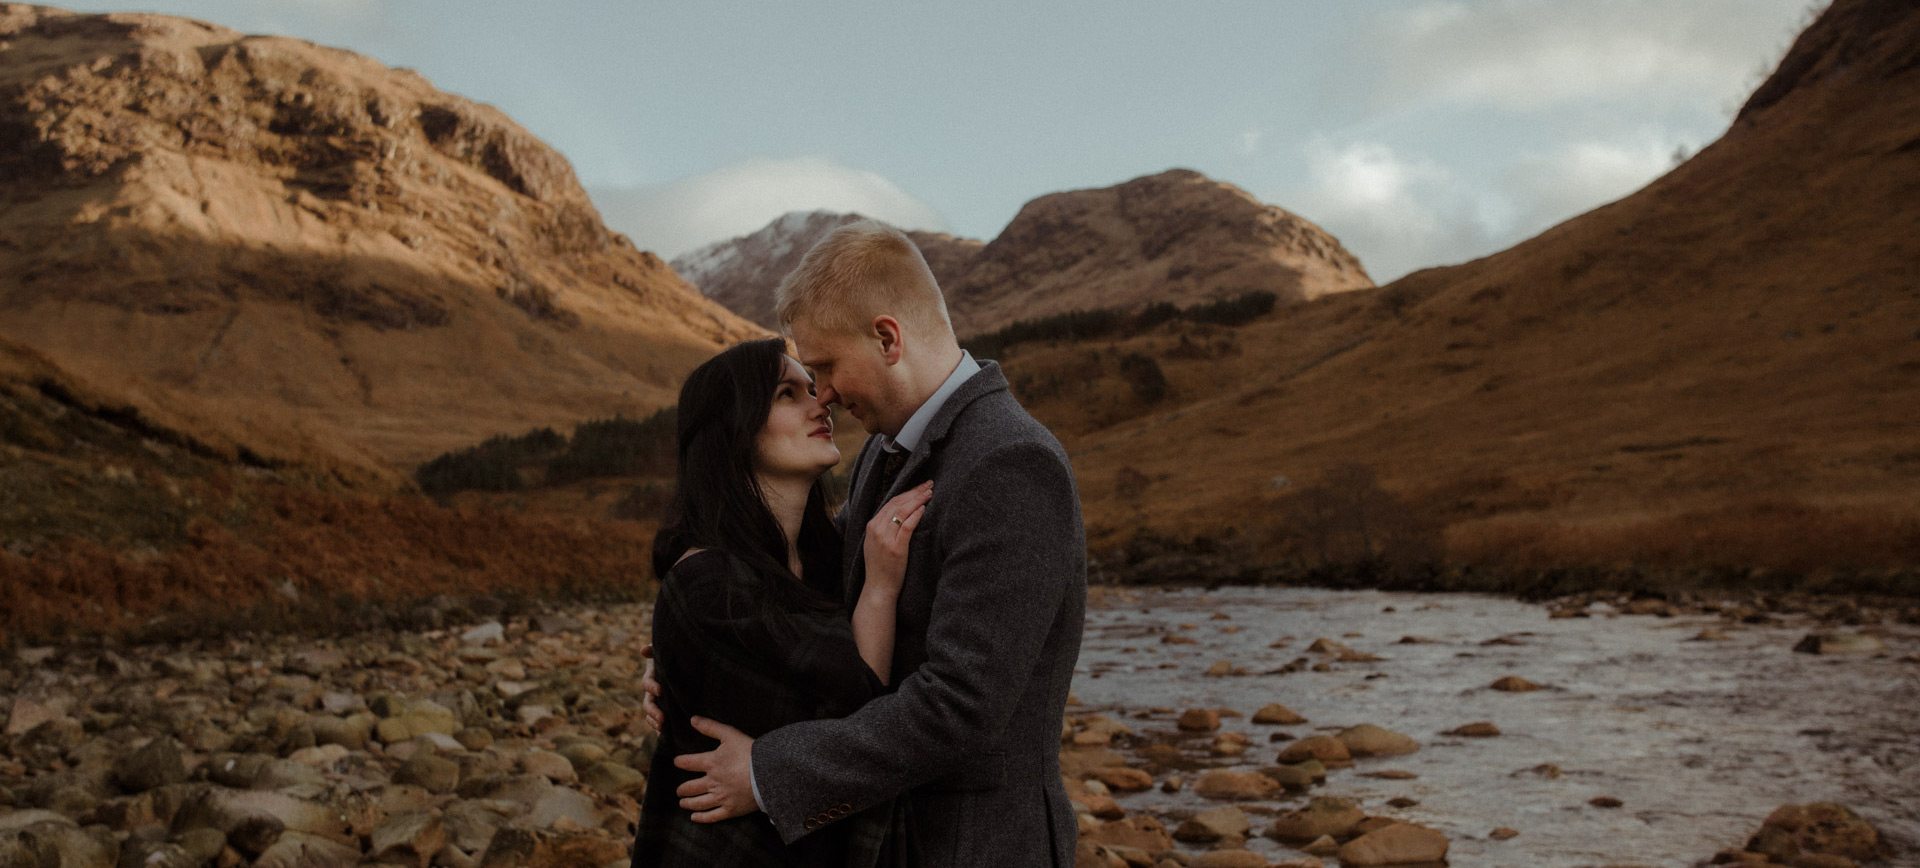 glen coe adventure couple photoshoot - couple portrait in scottish highlands